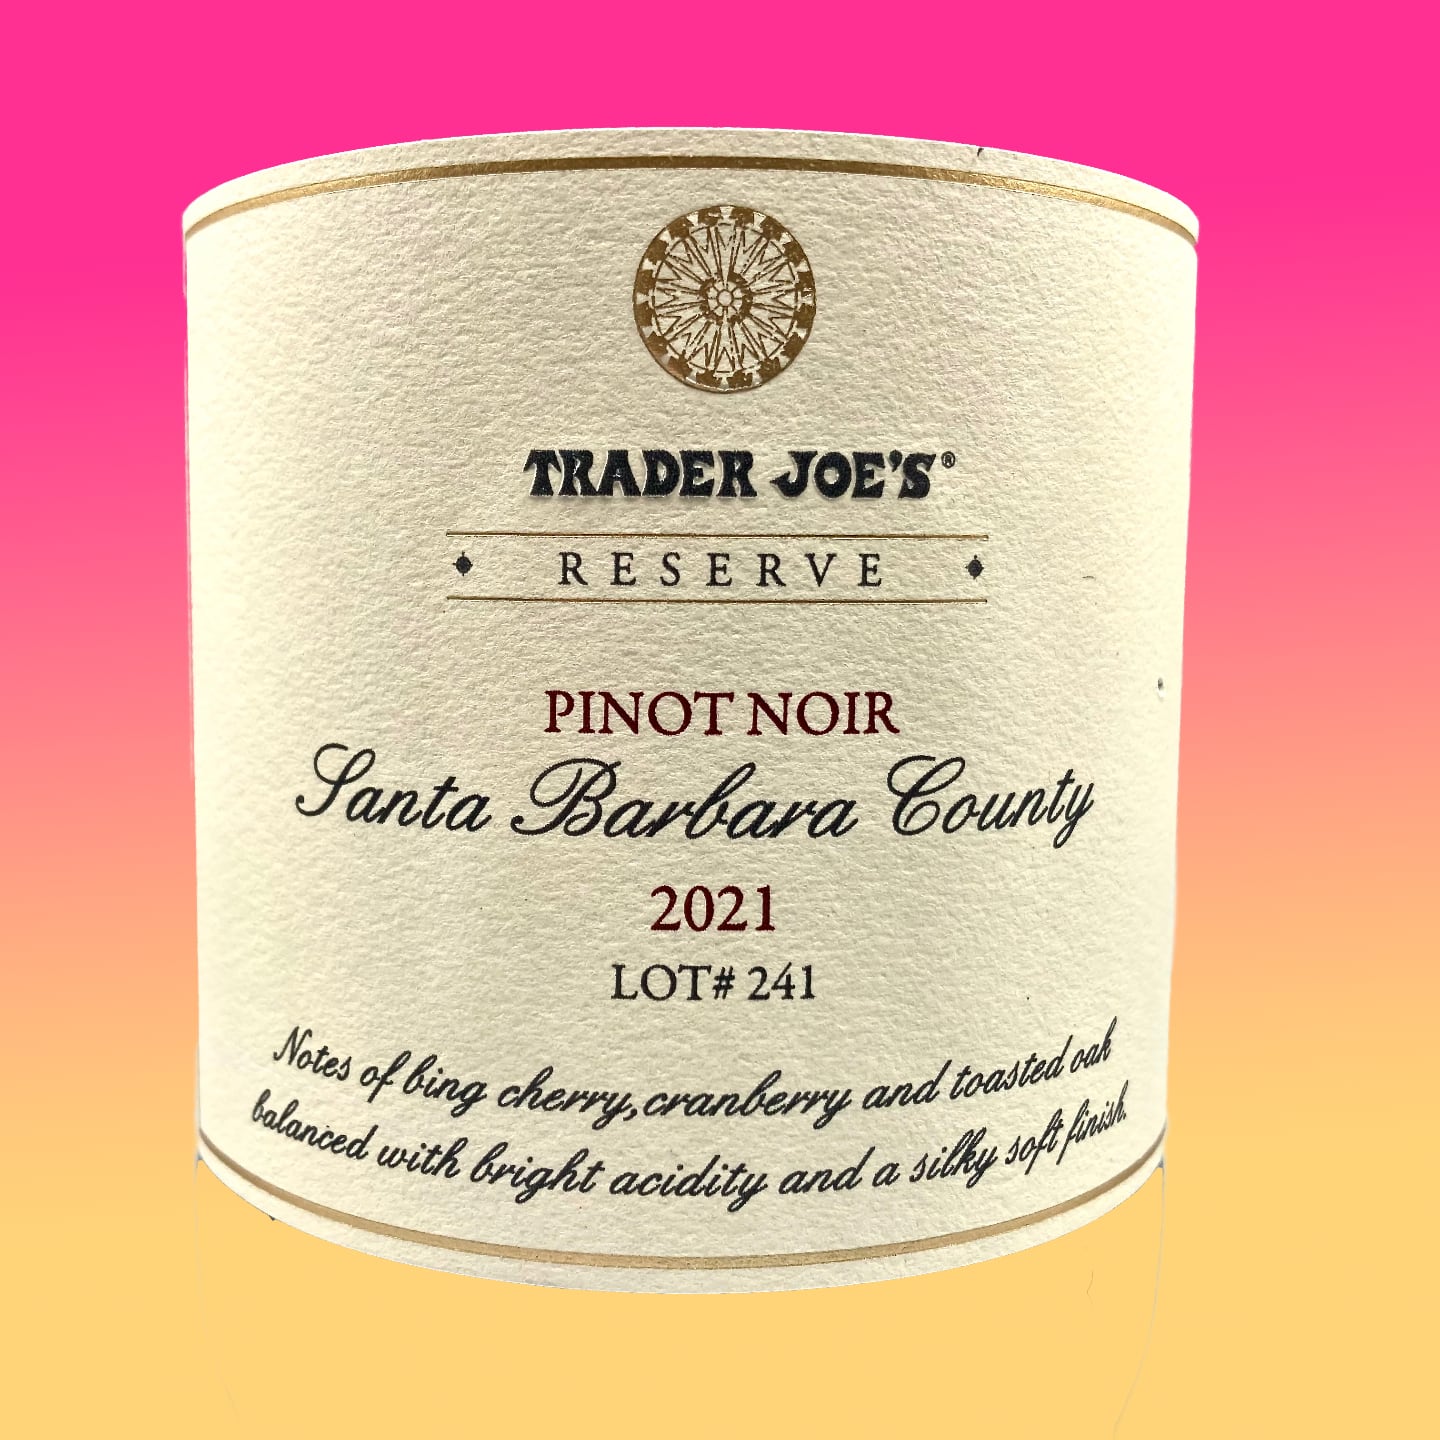 Trader Joe's Reserve Santa Barbara Pinot Noir 2021